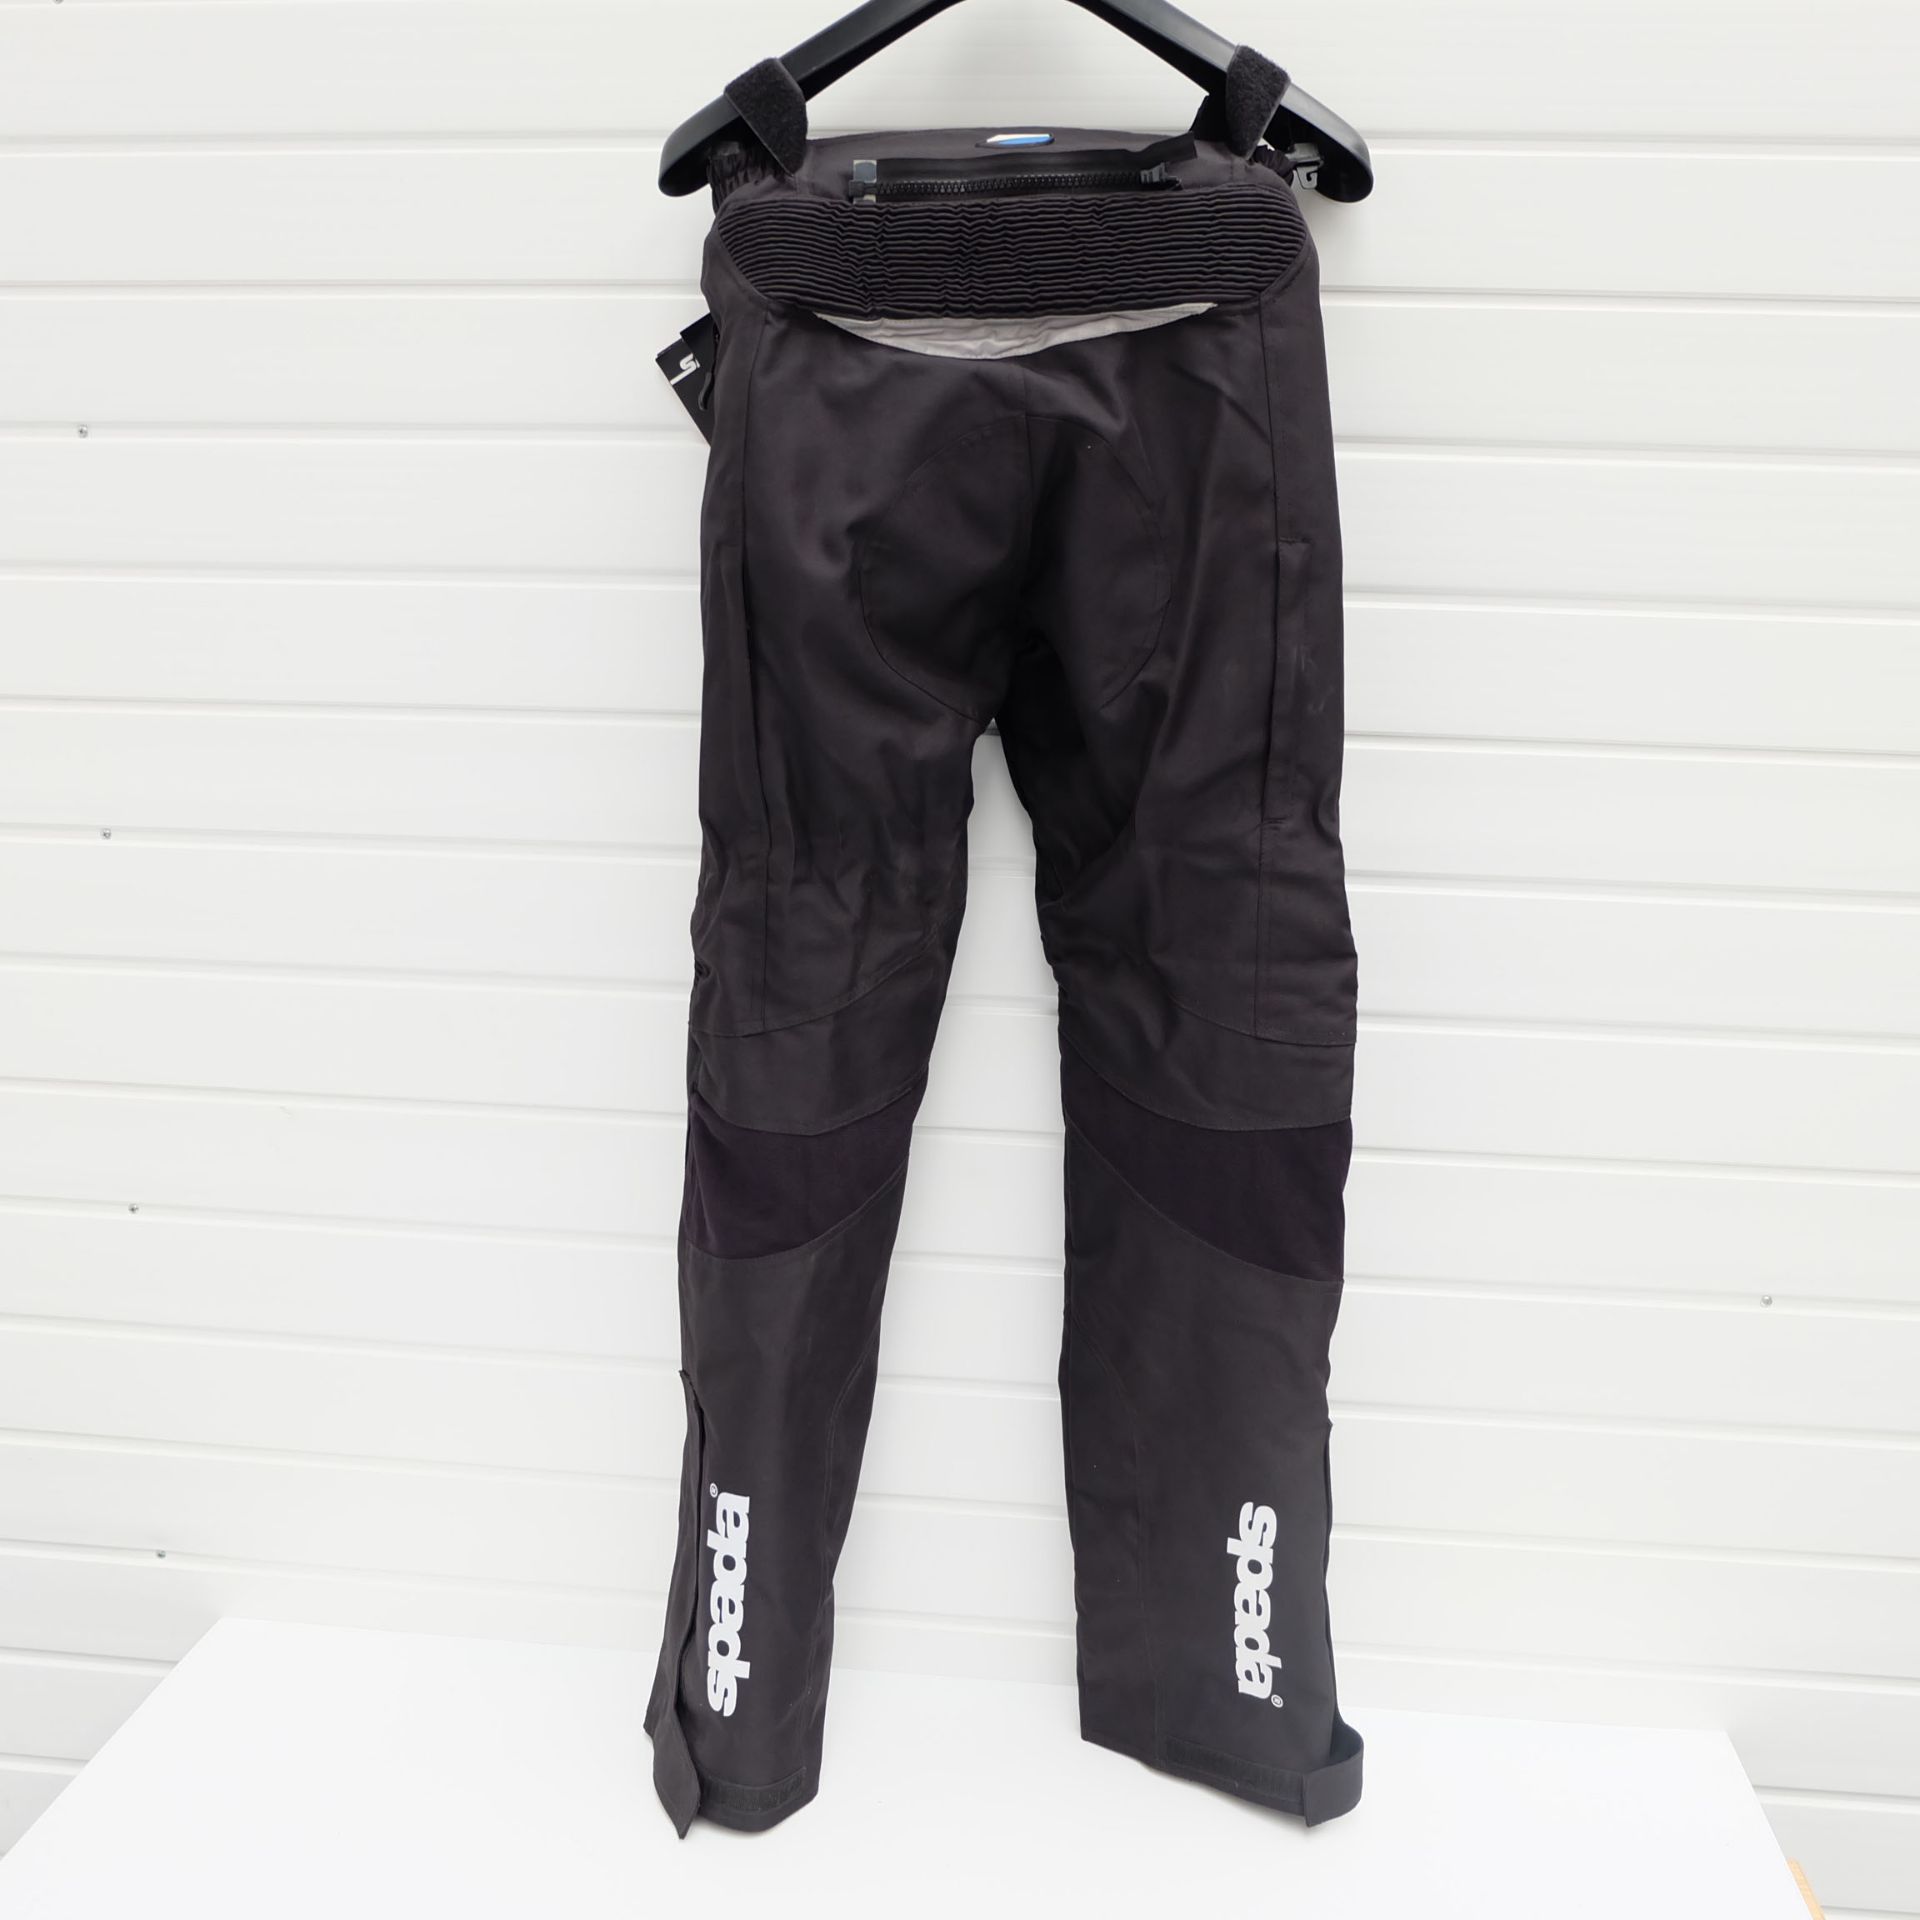 Spada Turini Motorcycle Trousers (Mens) Black. Medium - Image 4 of 10